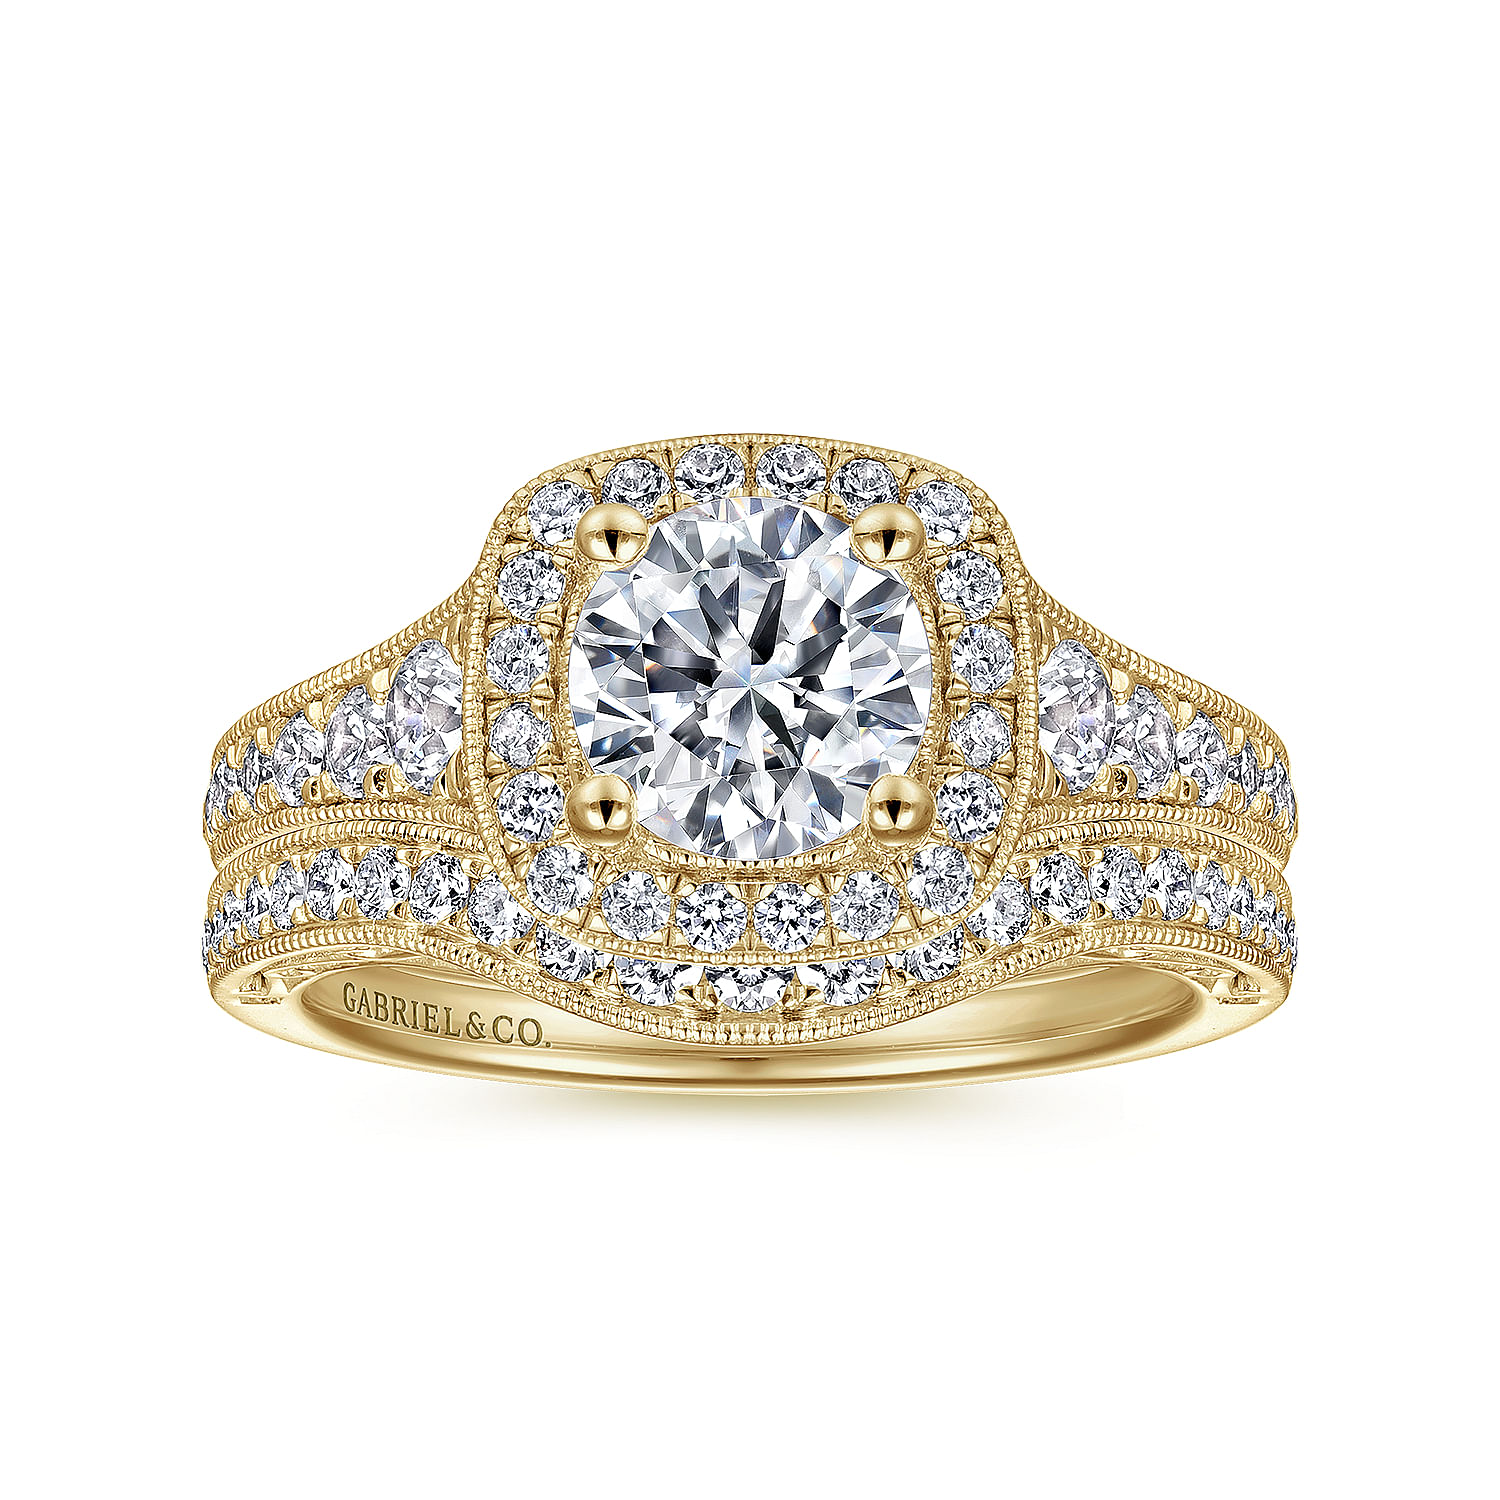 Vintage Inspired 14K Yellow Gold Cushion Halo Round Diamond Engagement Ring